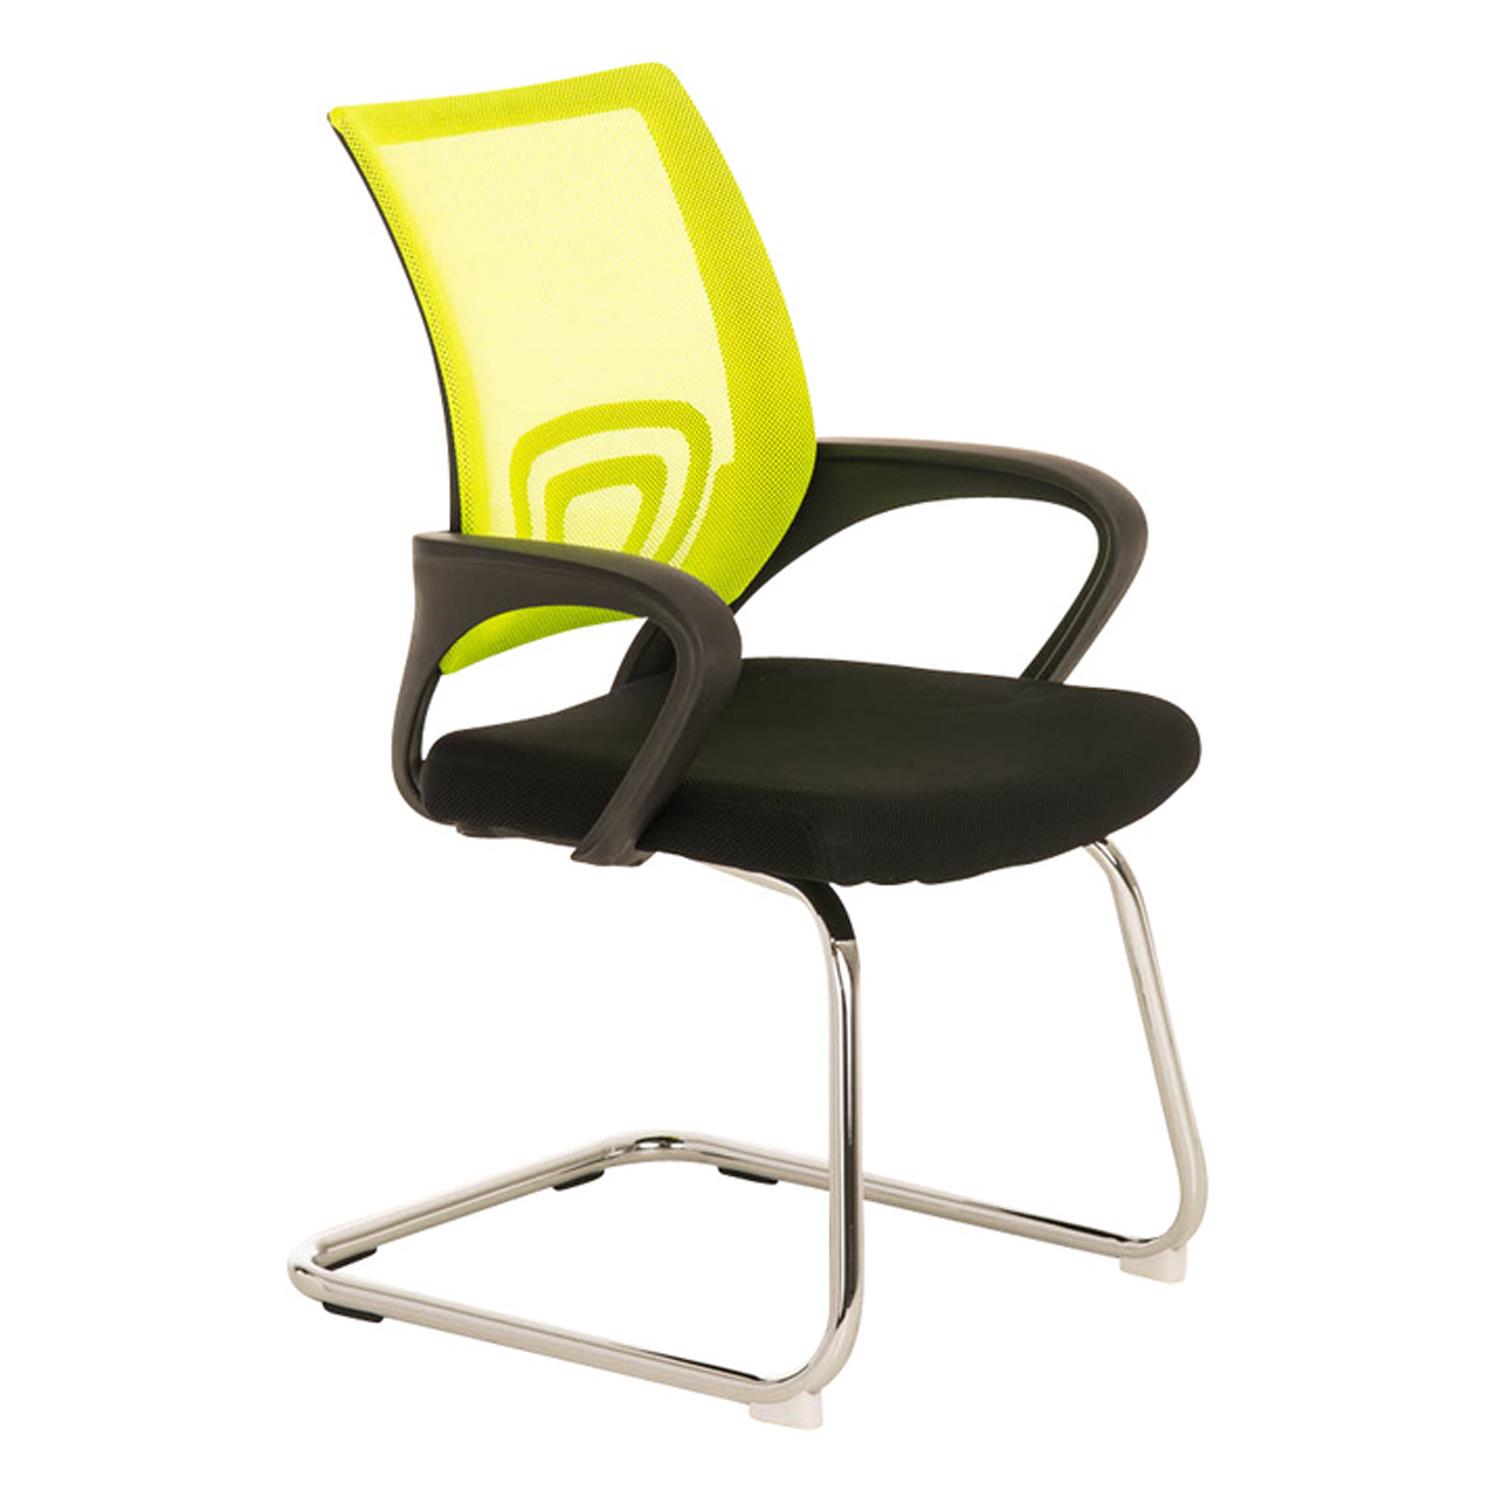 Cadeira de Visita SEUL V, Design Atractivo, Assento Acolchoado, Cor Amarelo